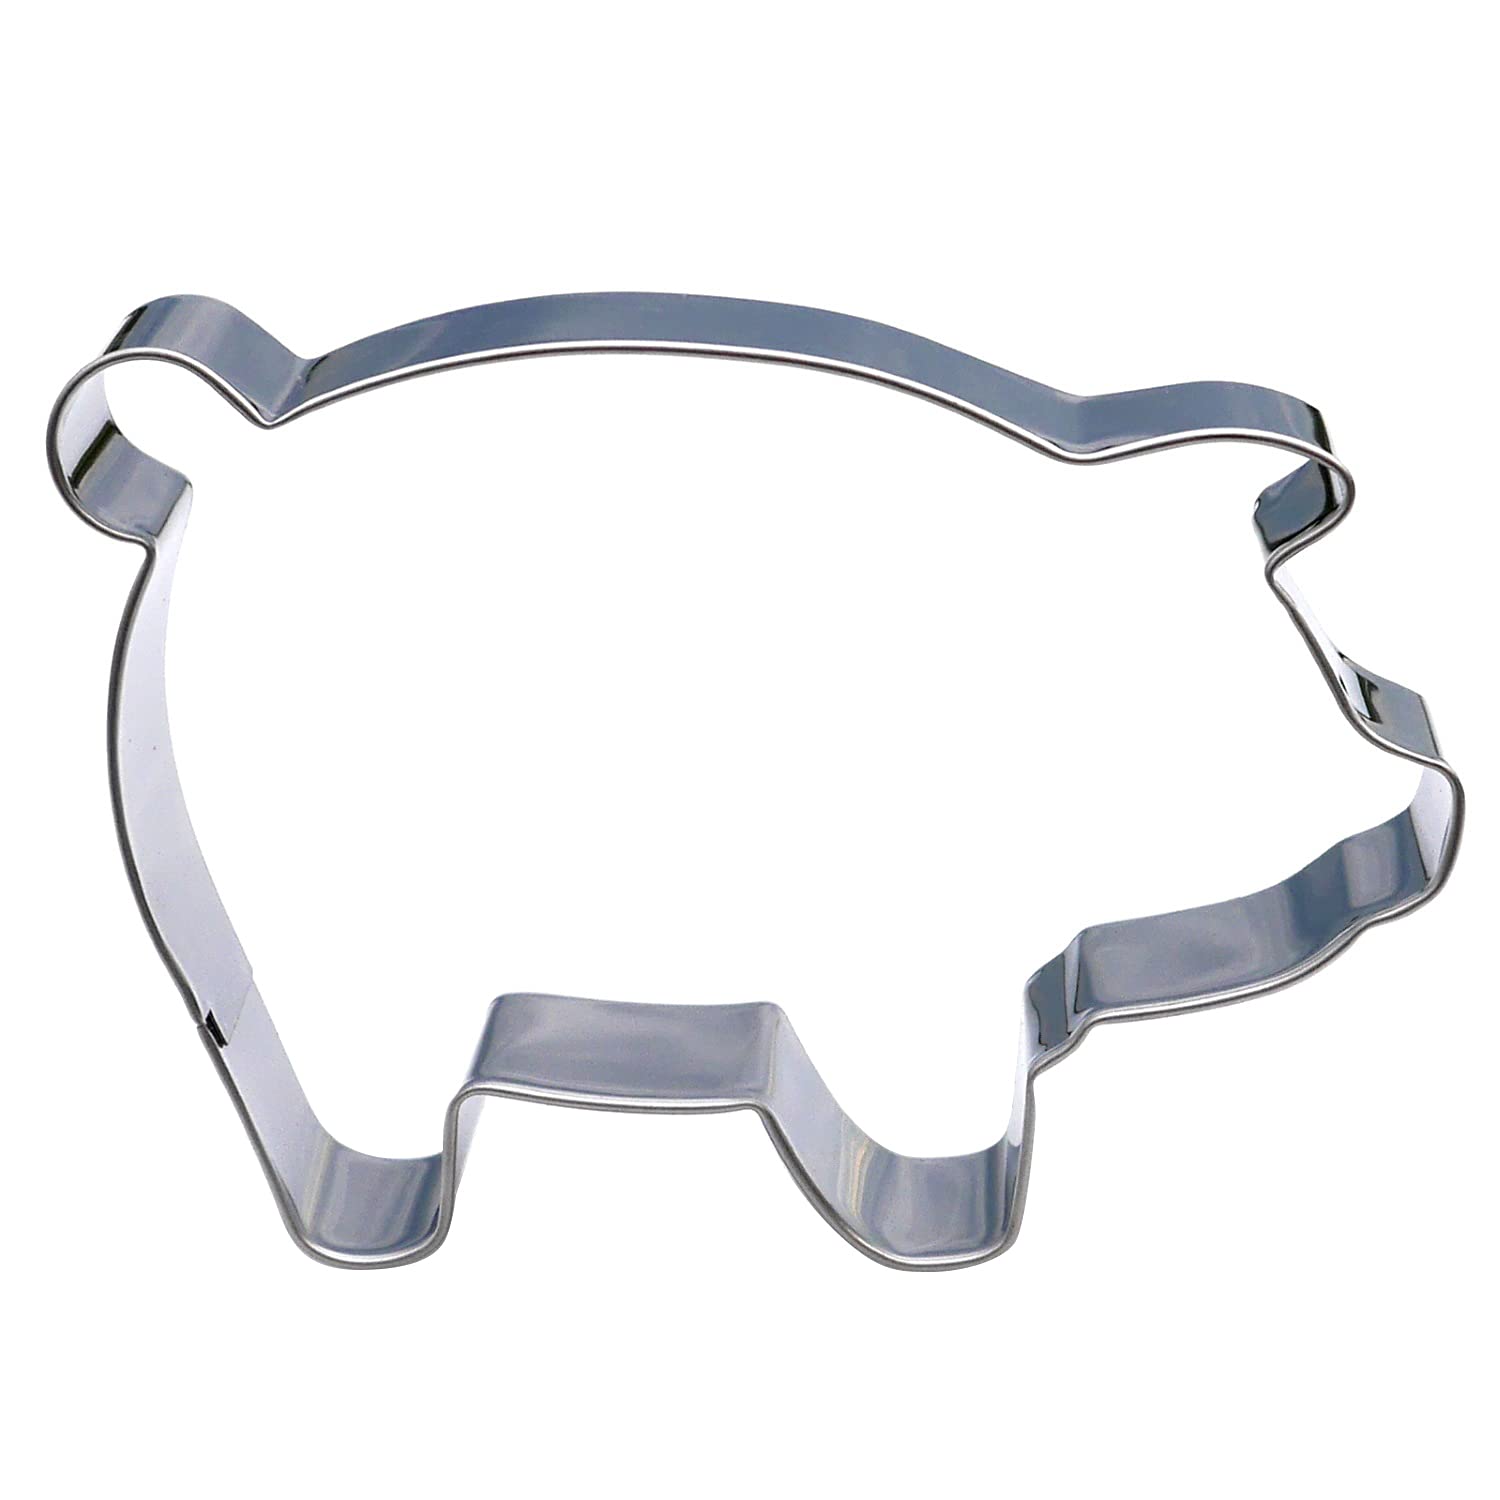 Pig Stainless Steel, Dishwasher Safe, Premium Stainless Steel Cookie Cutter, Food Grade, 1" Deep